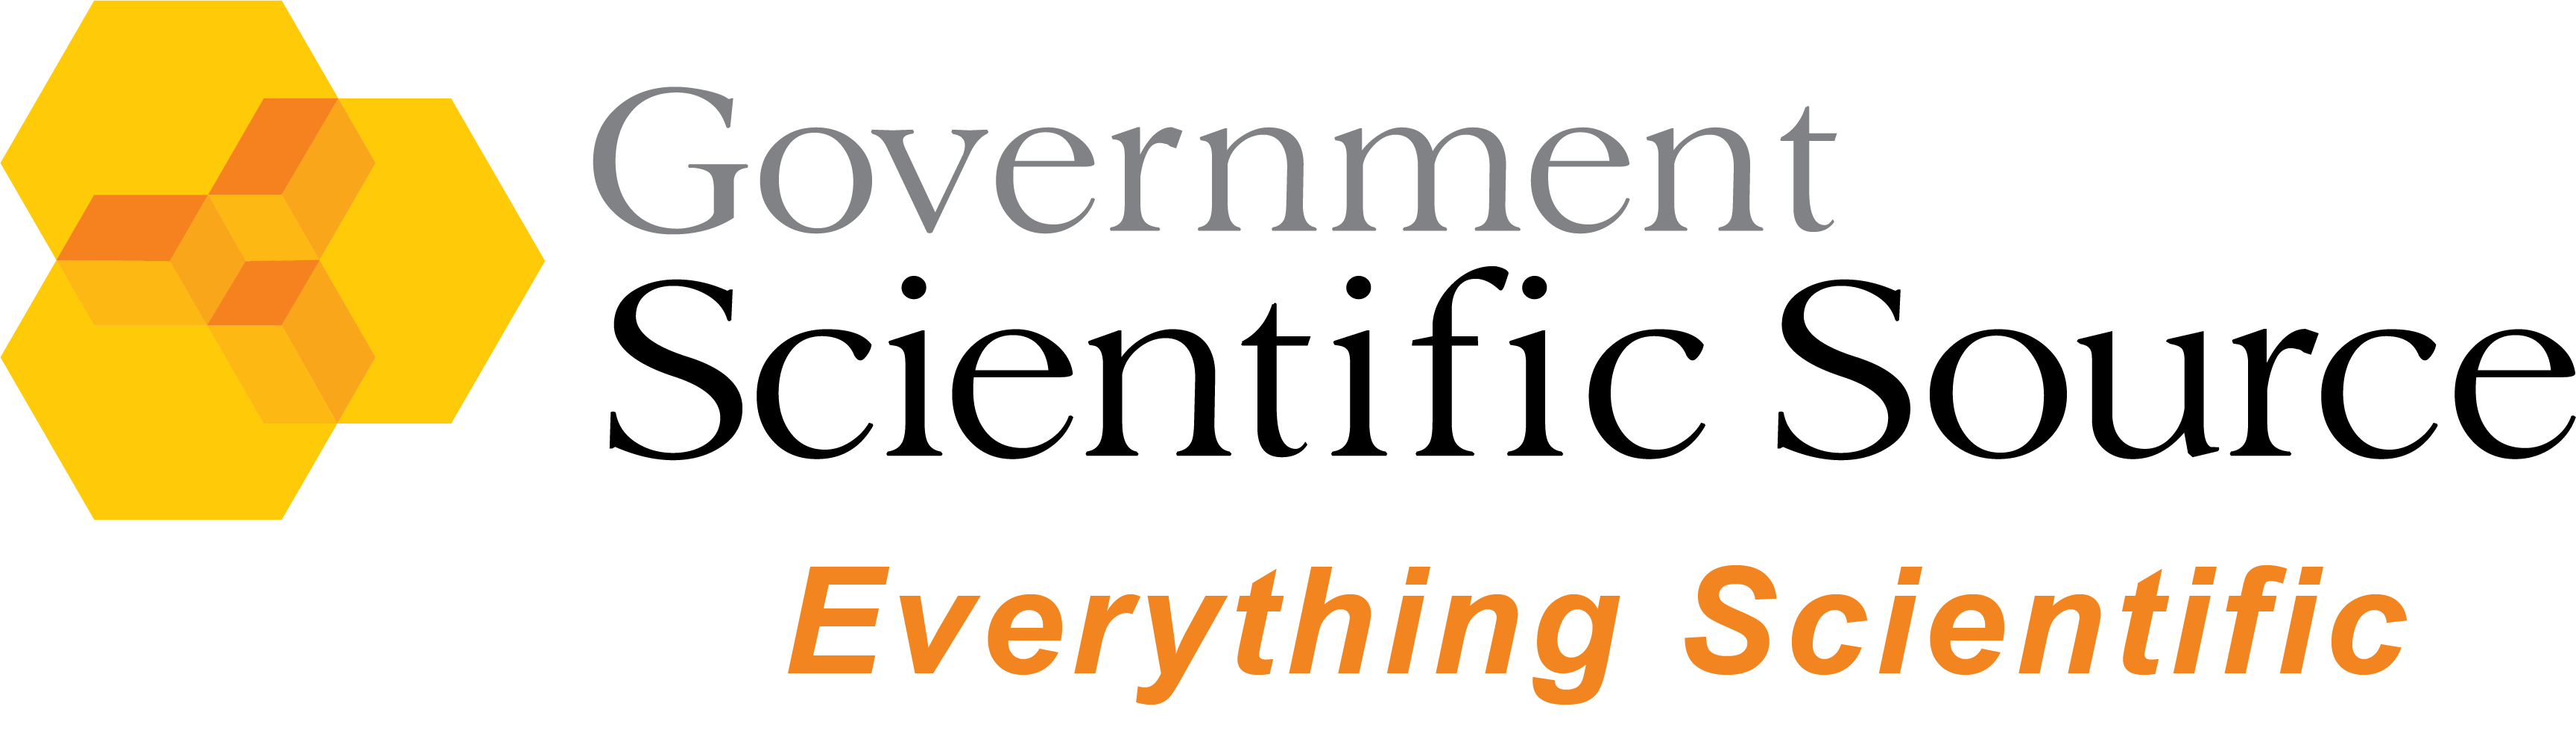 government scientific logo